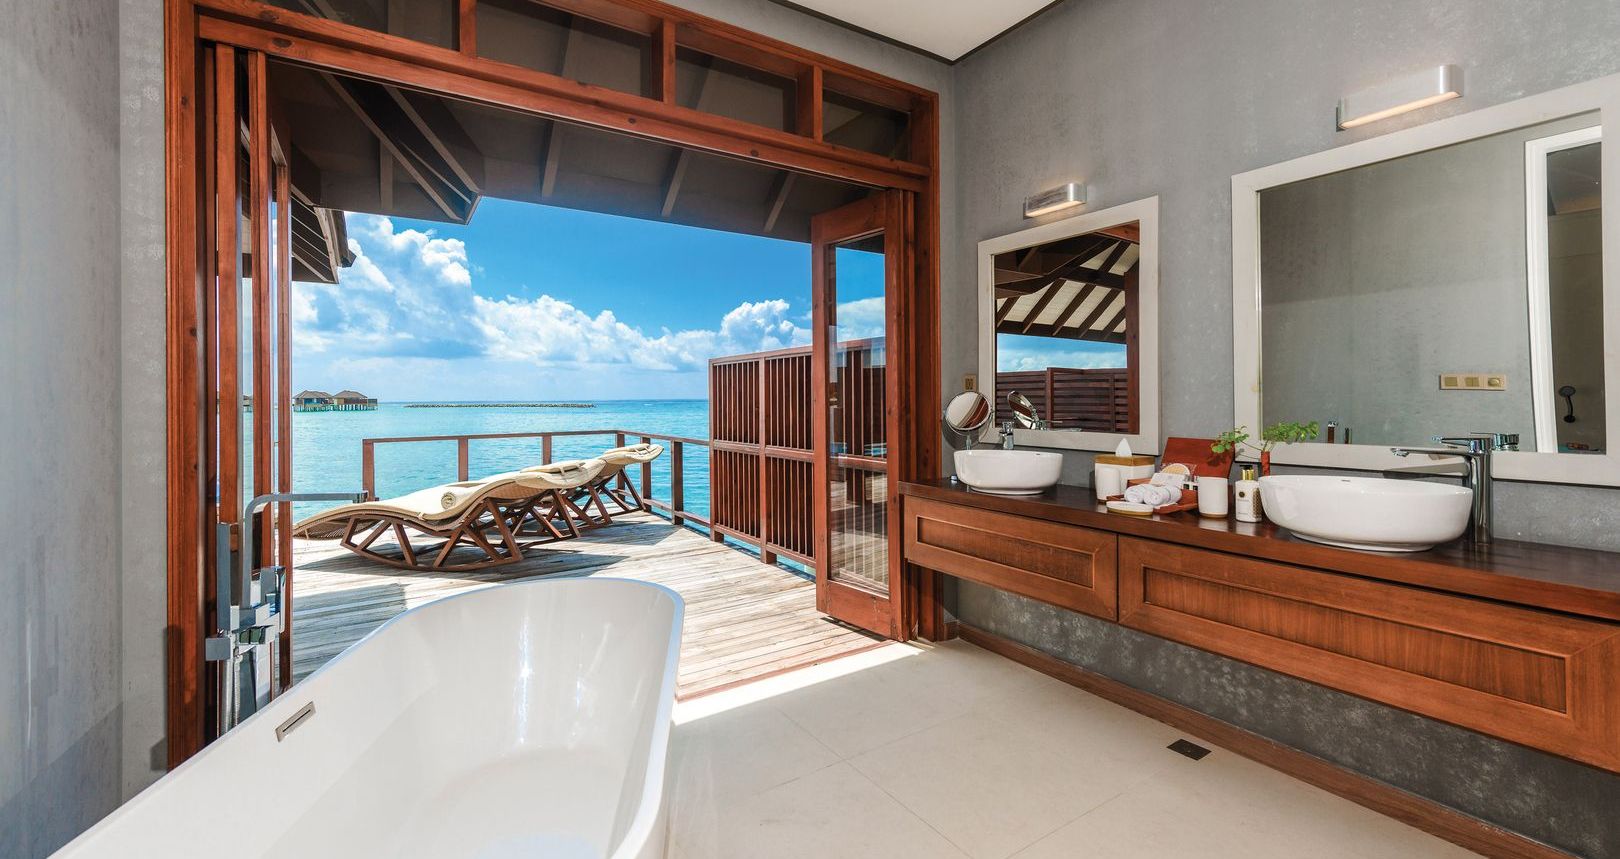 a bathroom with a bathtub and a bathtub on a deck overlooking the ocean